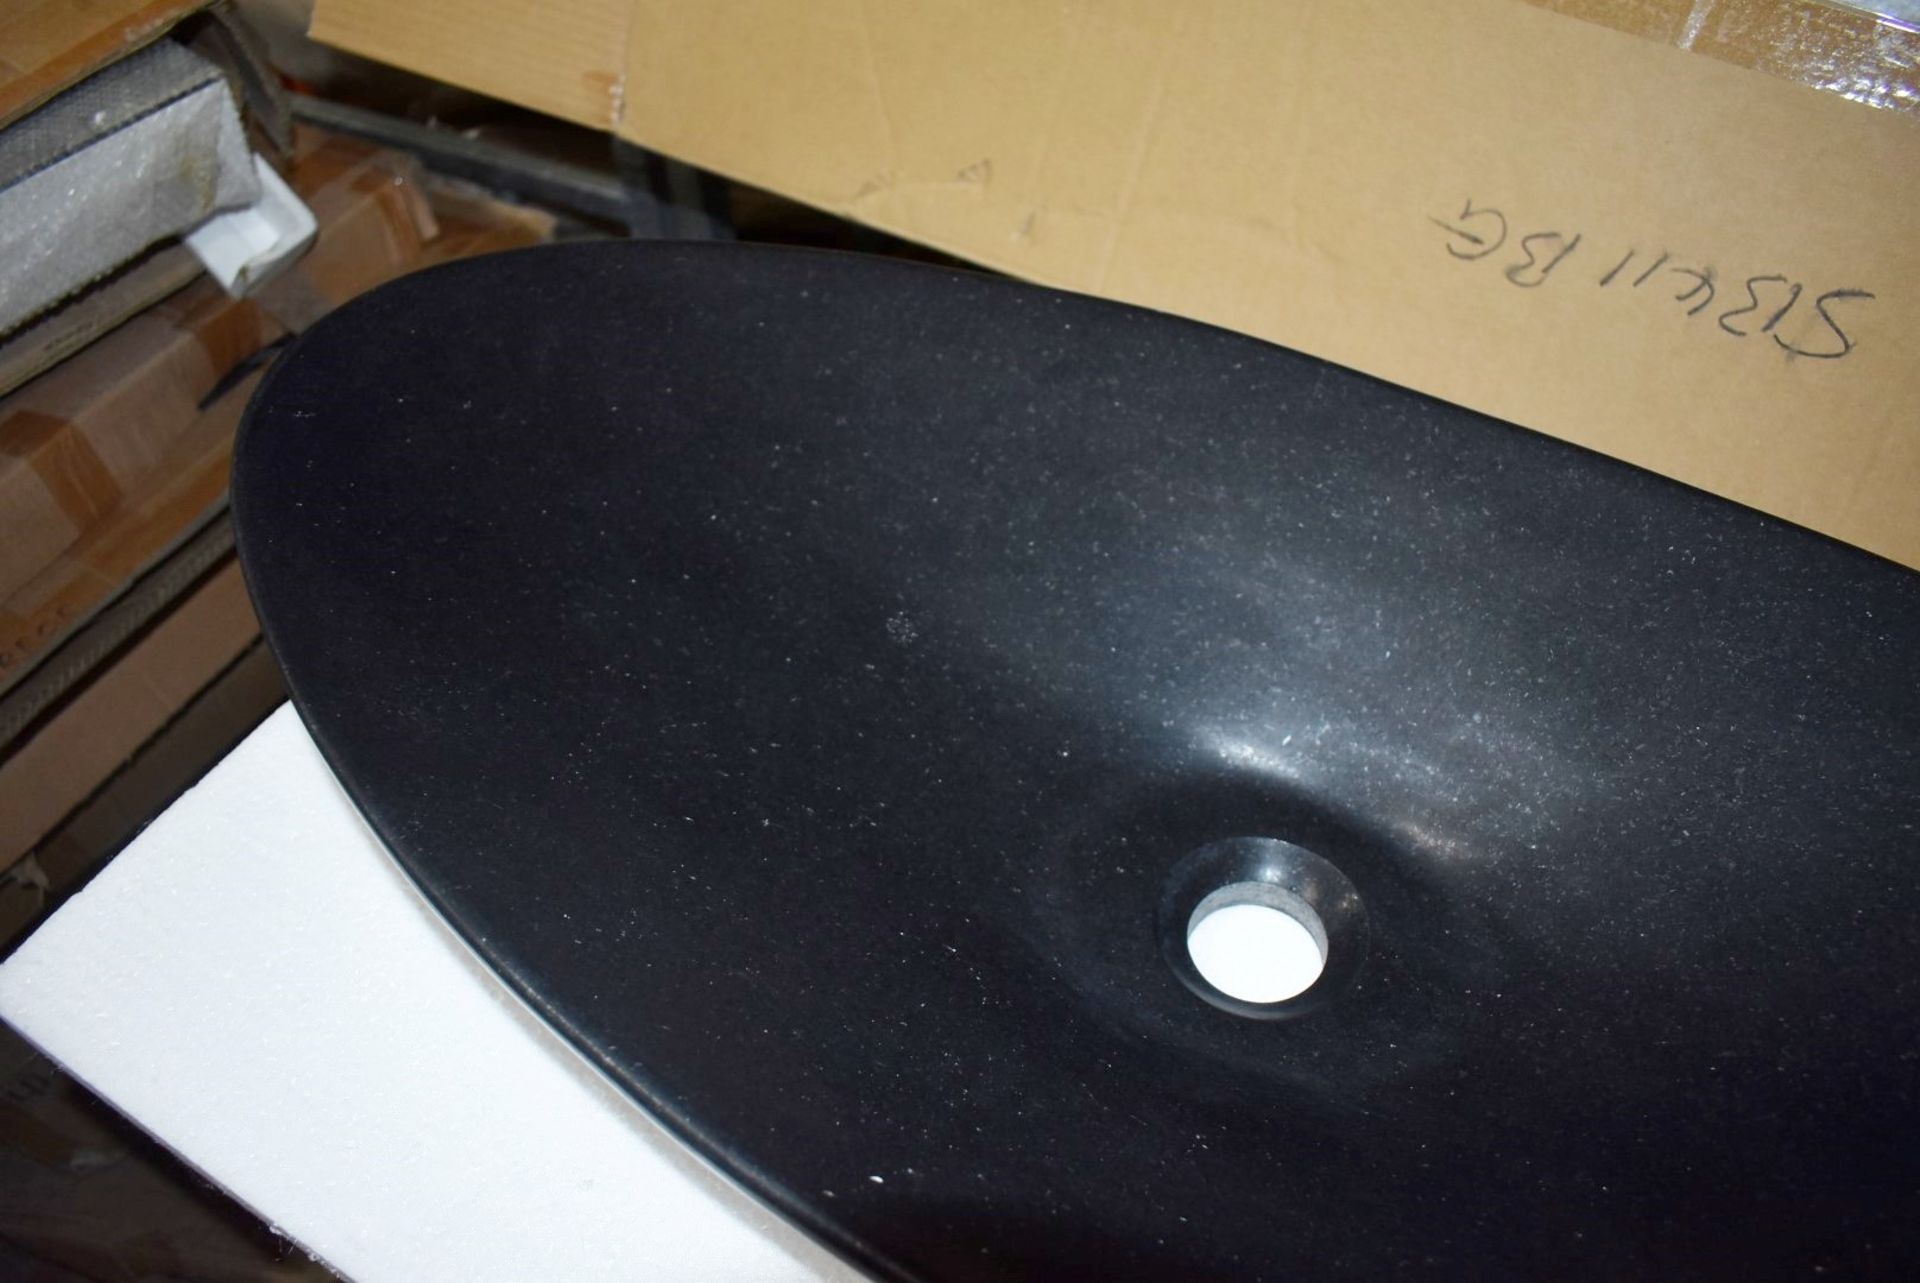 1 x Stonearth 'Cyra' Black Granite Stone Countertop Sink Basin - New Boxed Stock - RRP £620 - - Image 9 of 10